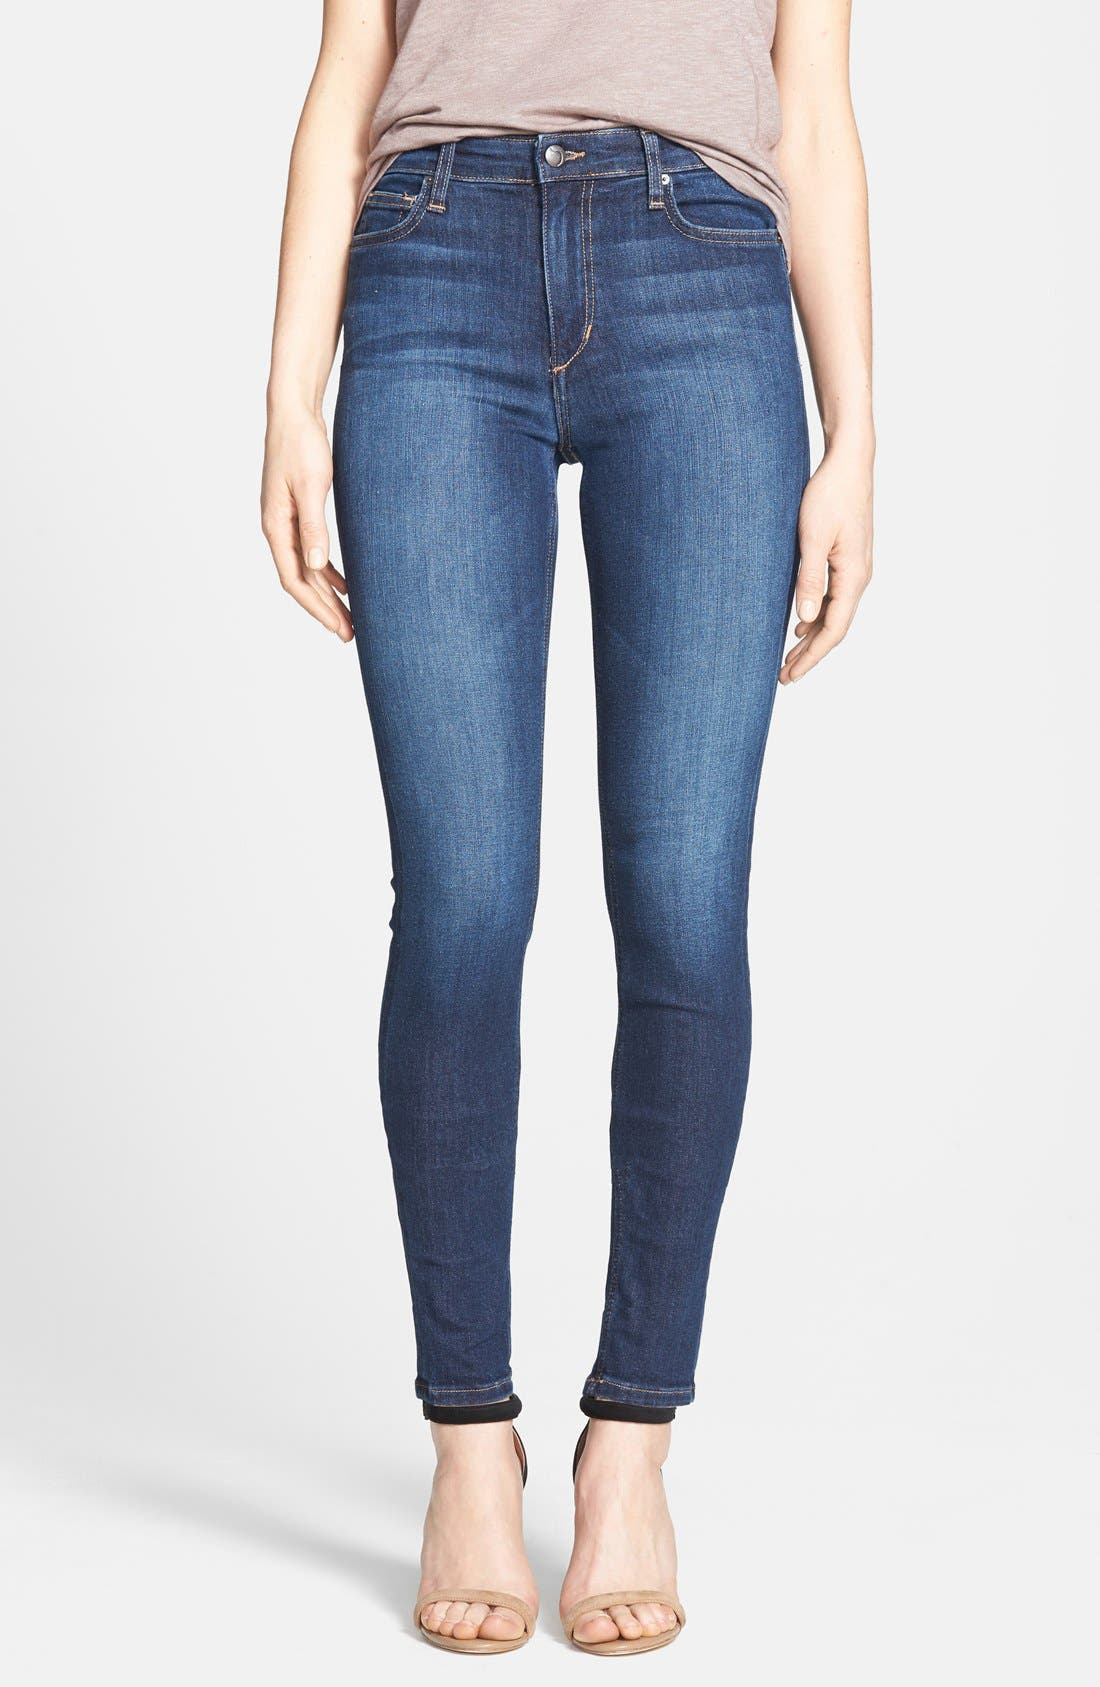 wrangler jeans lowest price